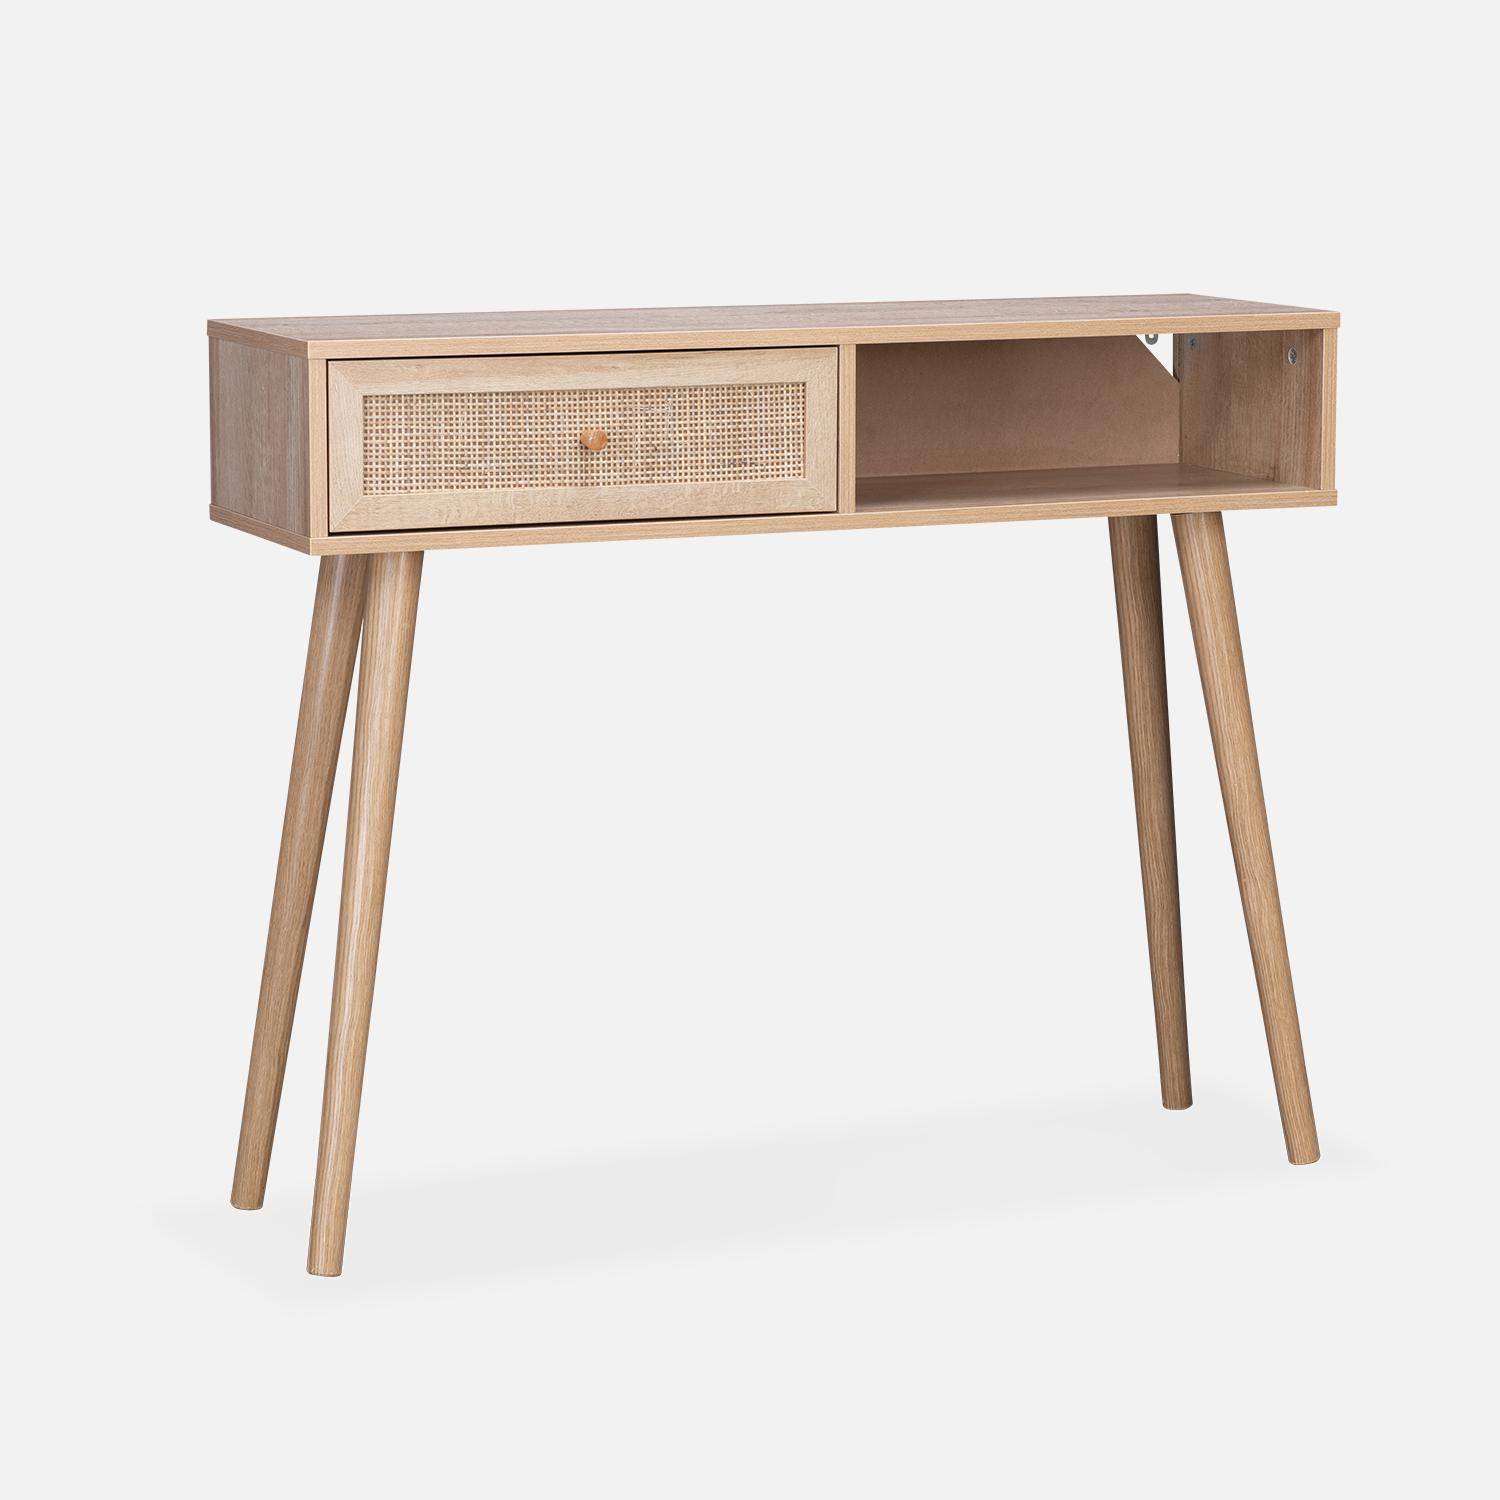 Wood and cane rattan Scandi-style console table, 100x30x81cm - Boheme - Natural wood colour,sweeek,Photo2